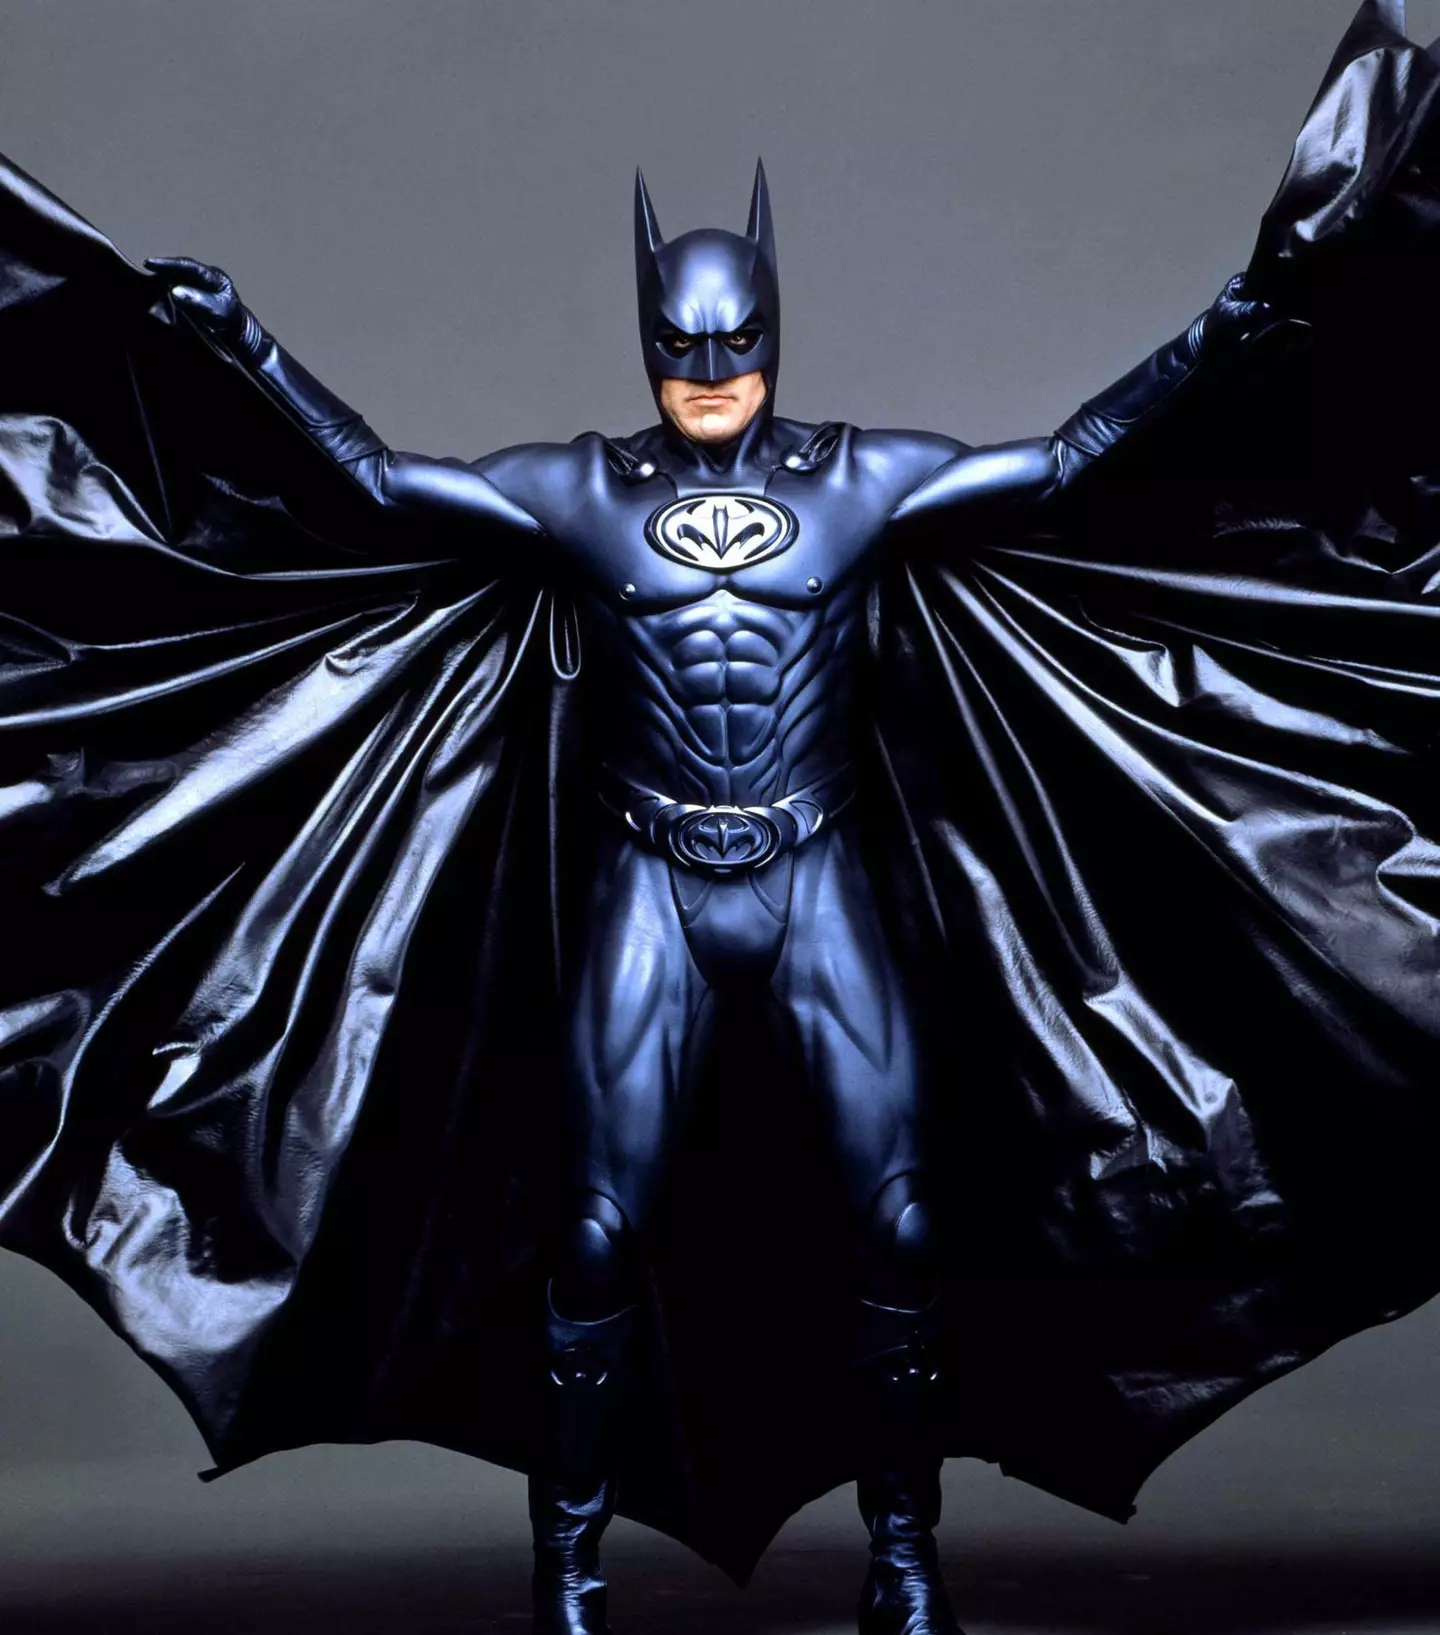 George Clooney as Batman in Batman & Robin, it wasn't exactly a popular movie.